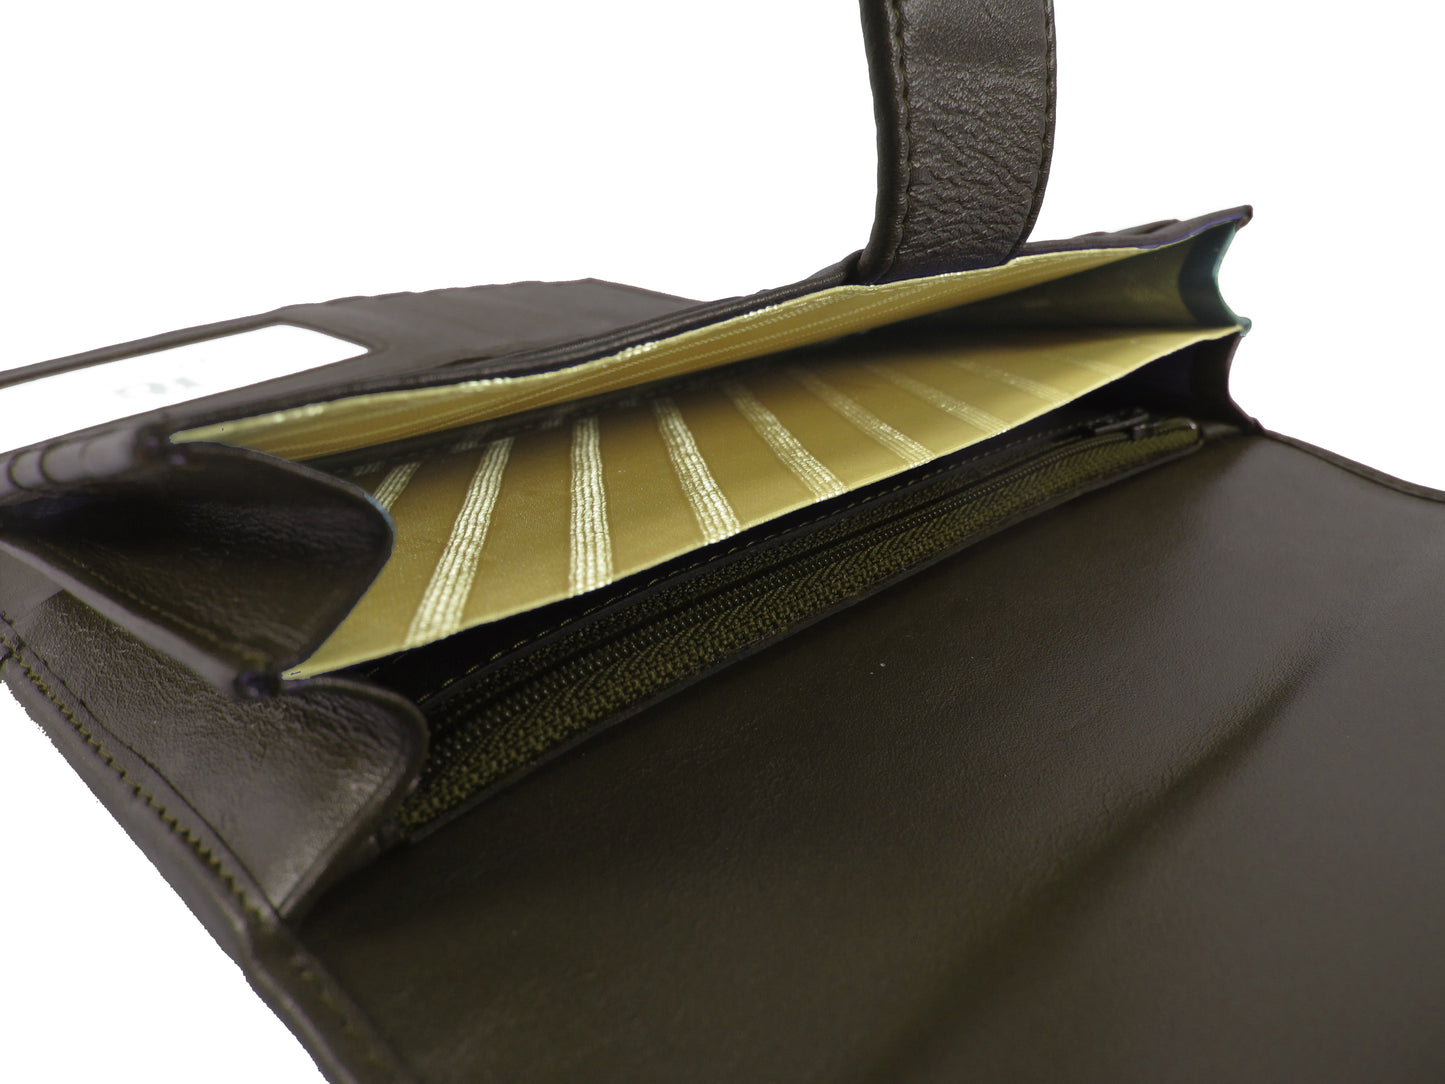 Genuine Polished Stingray Skin Leather Intrecciato Handmade Trifold Clutch Wallet Purse